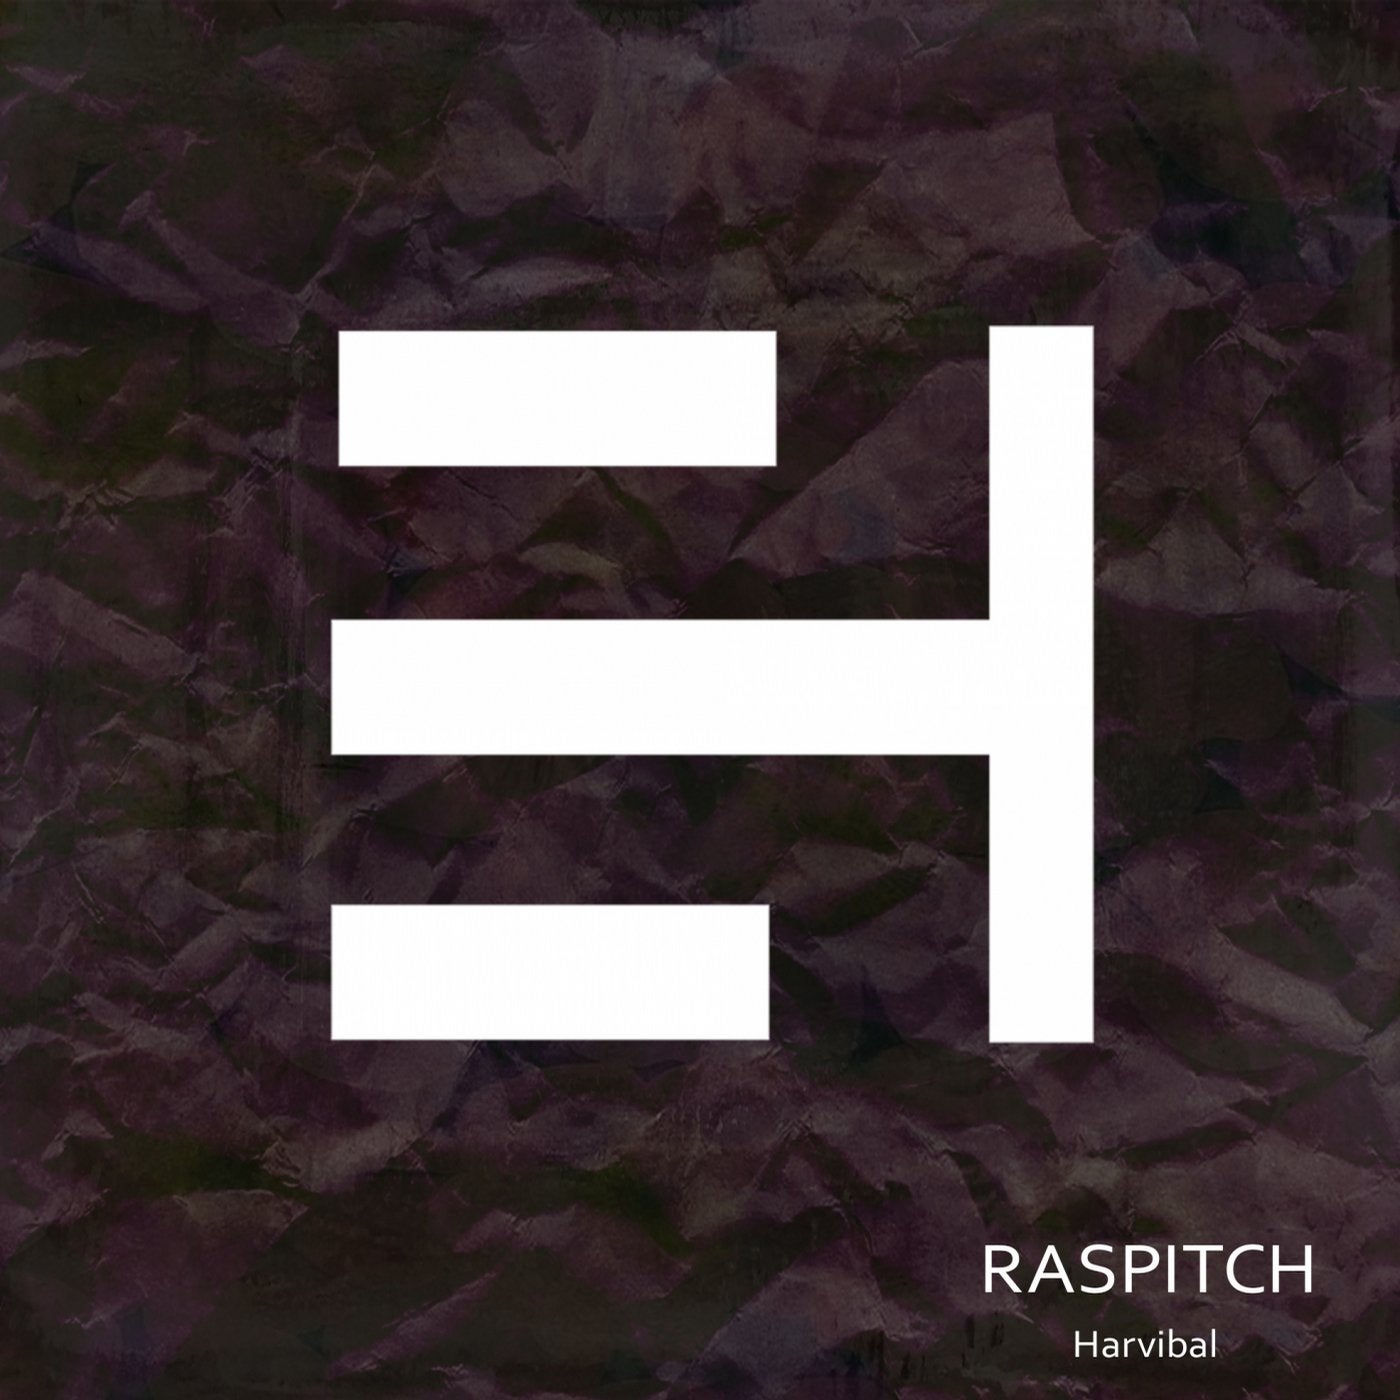 Raspitch